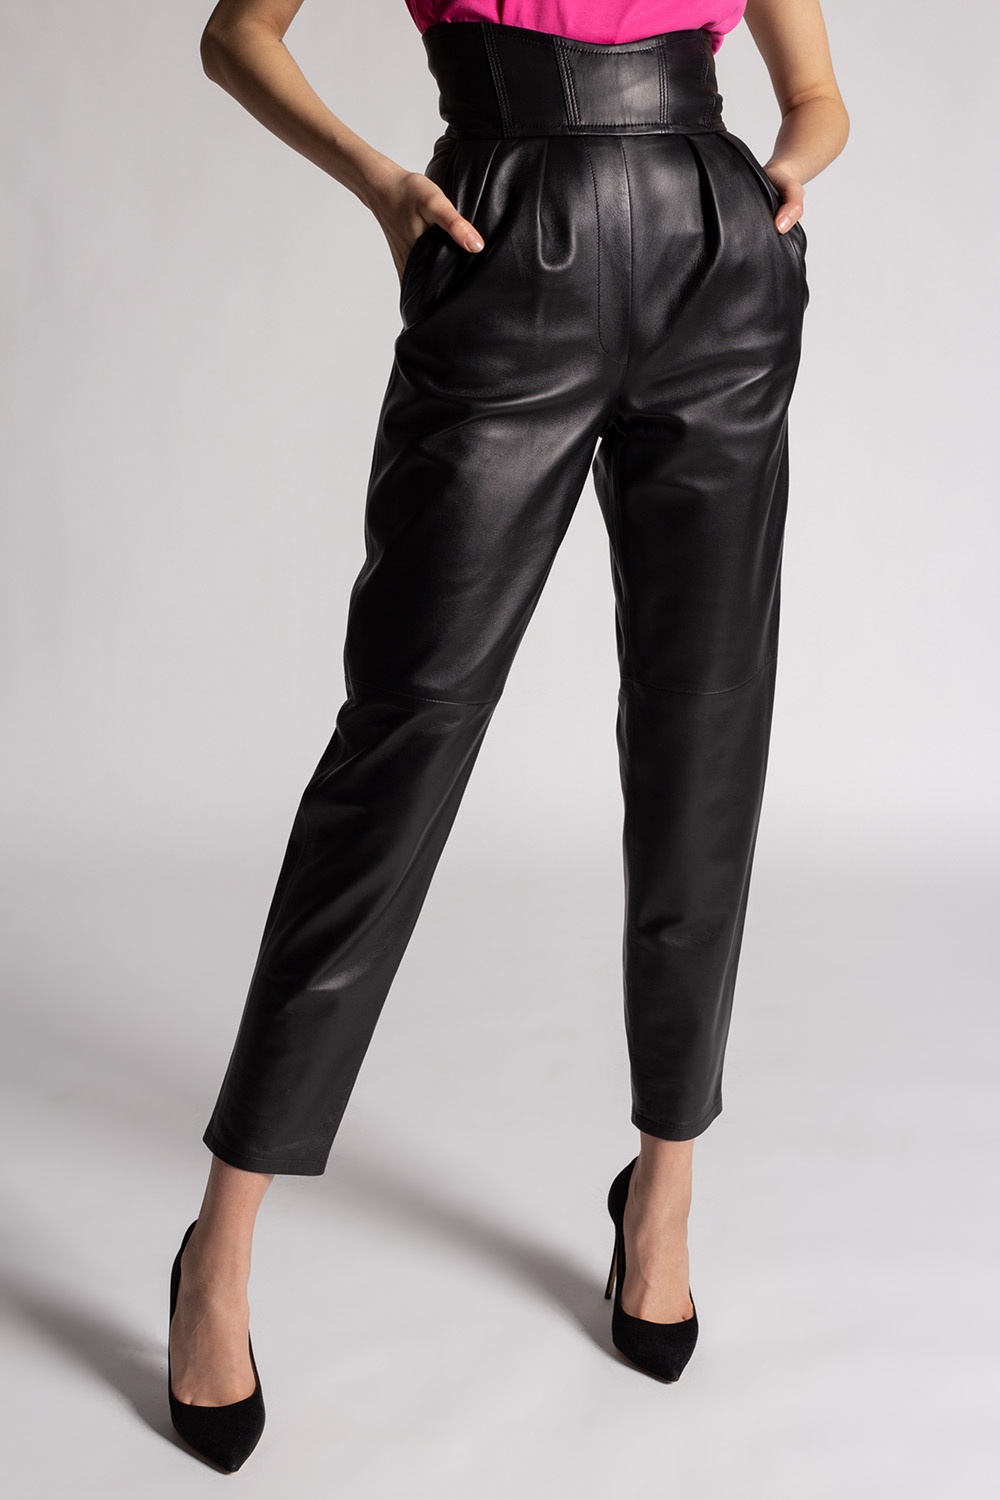 GenesinlifeShops - Philipp Plein High - waisted leather trousers